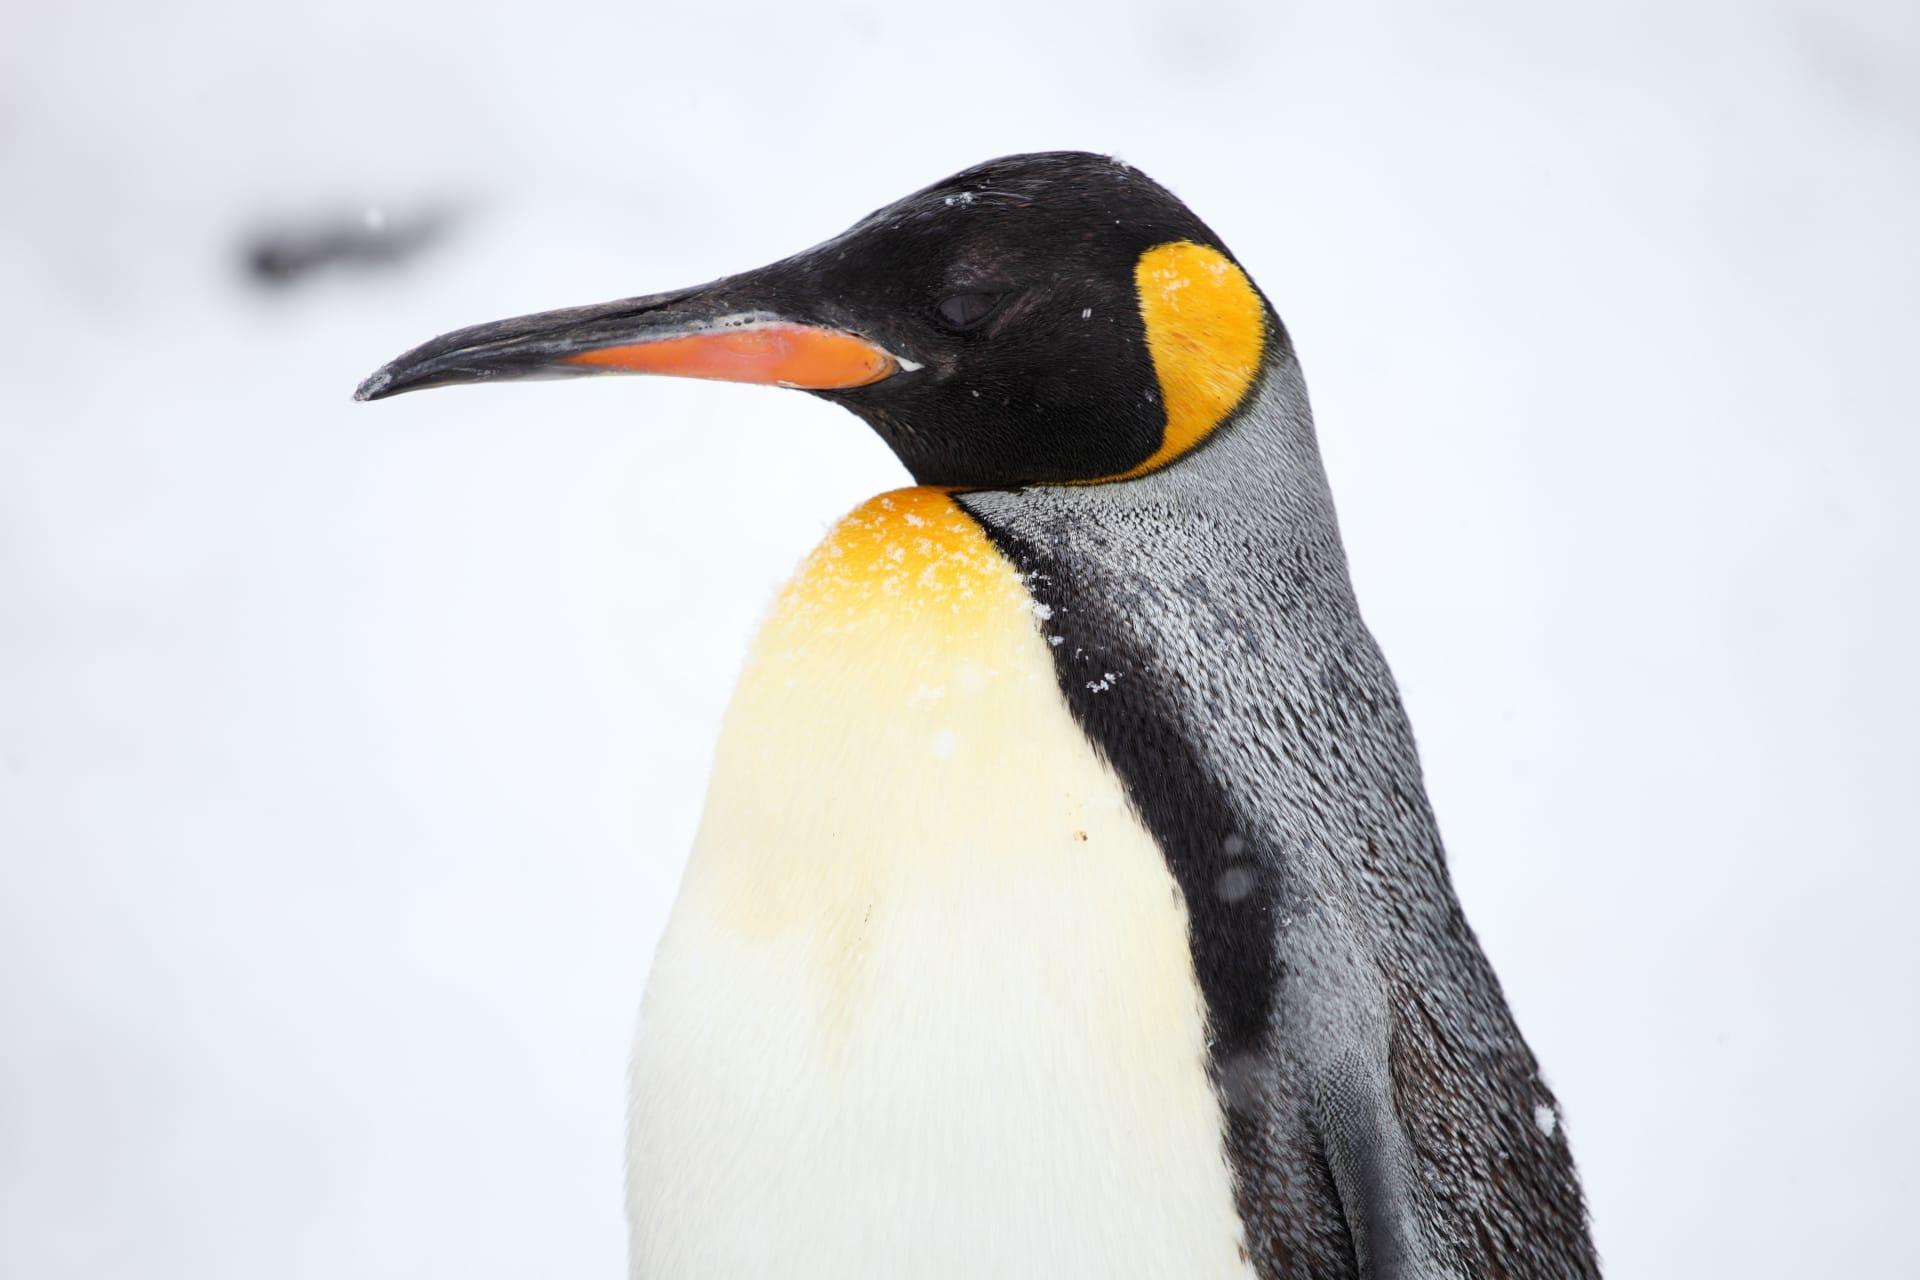 Emperor penguin pictures